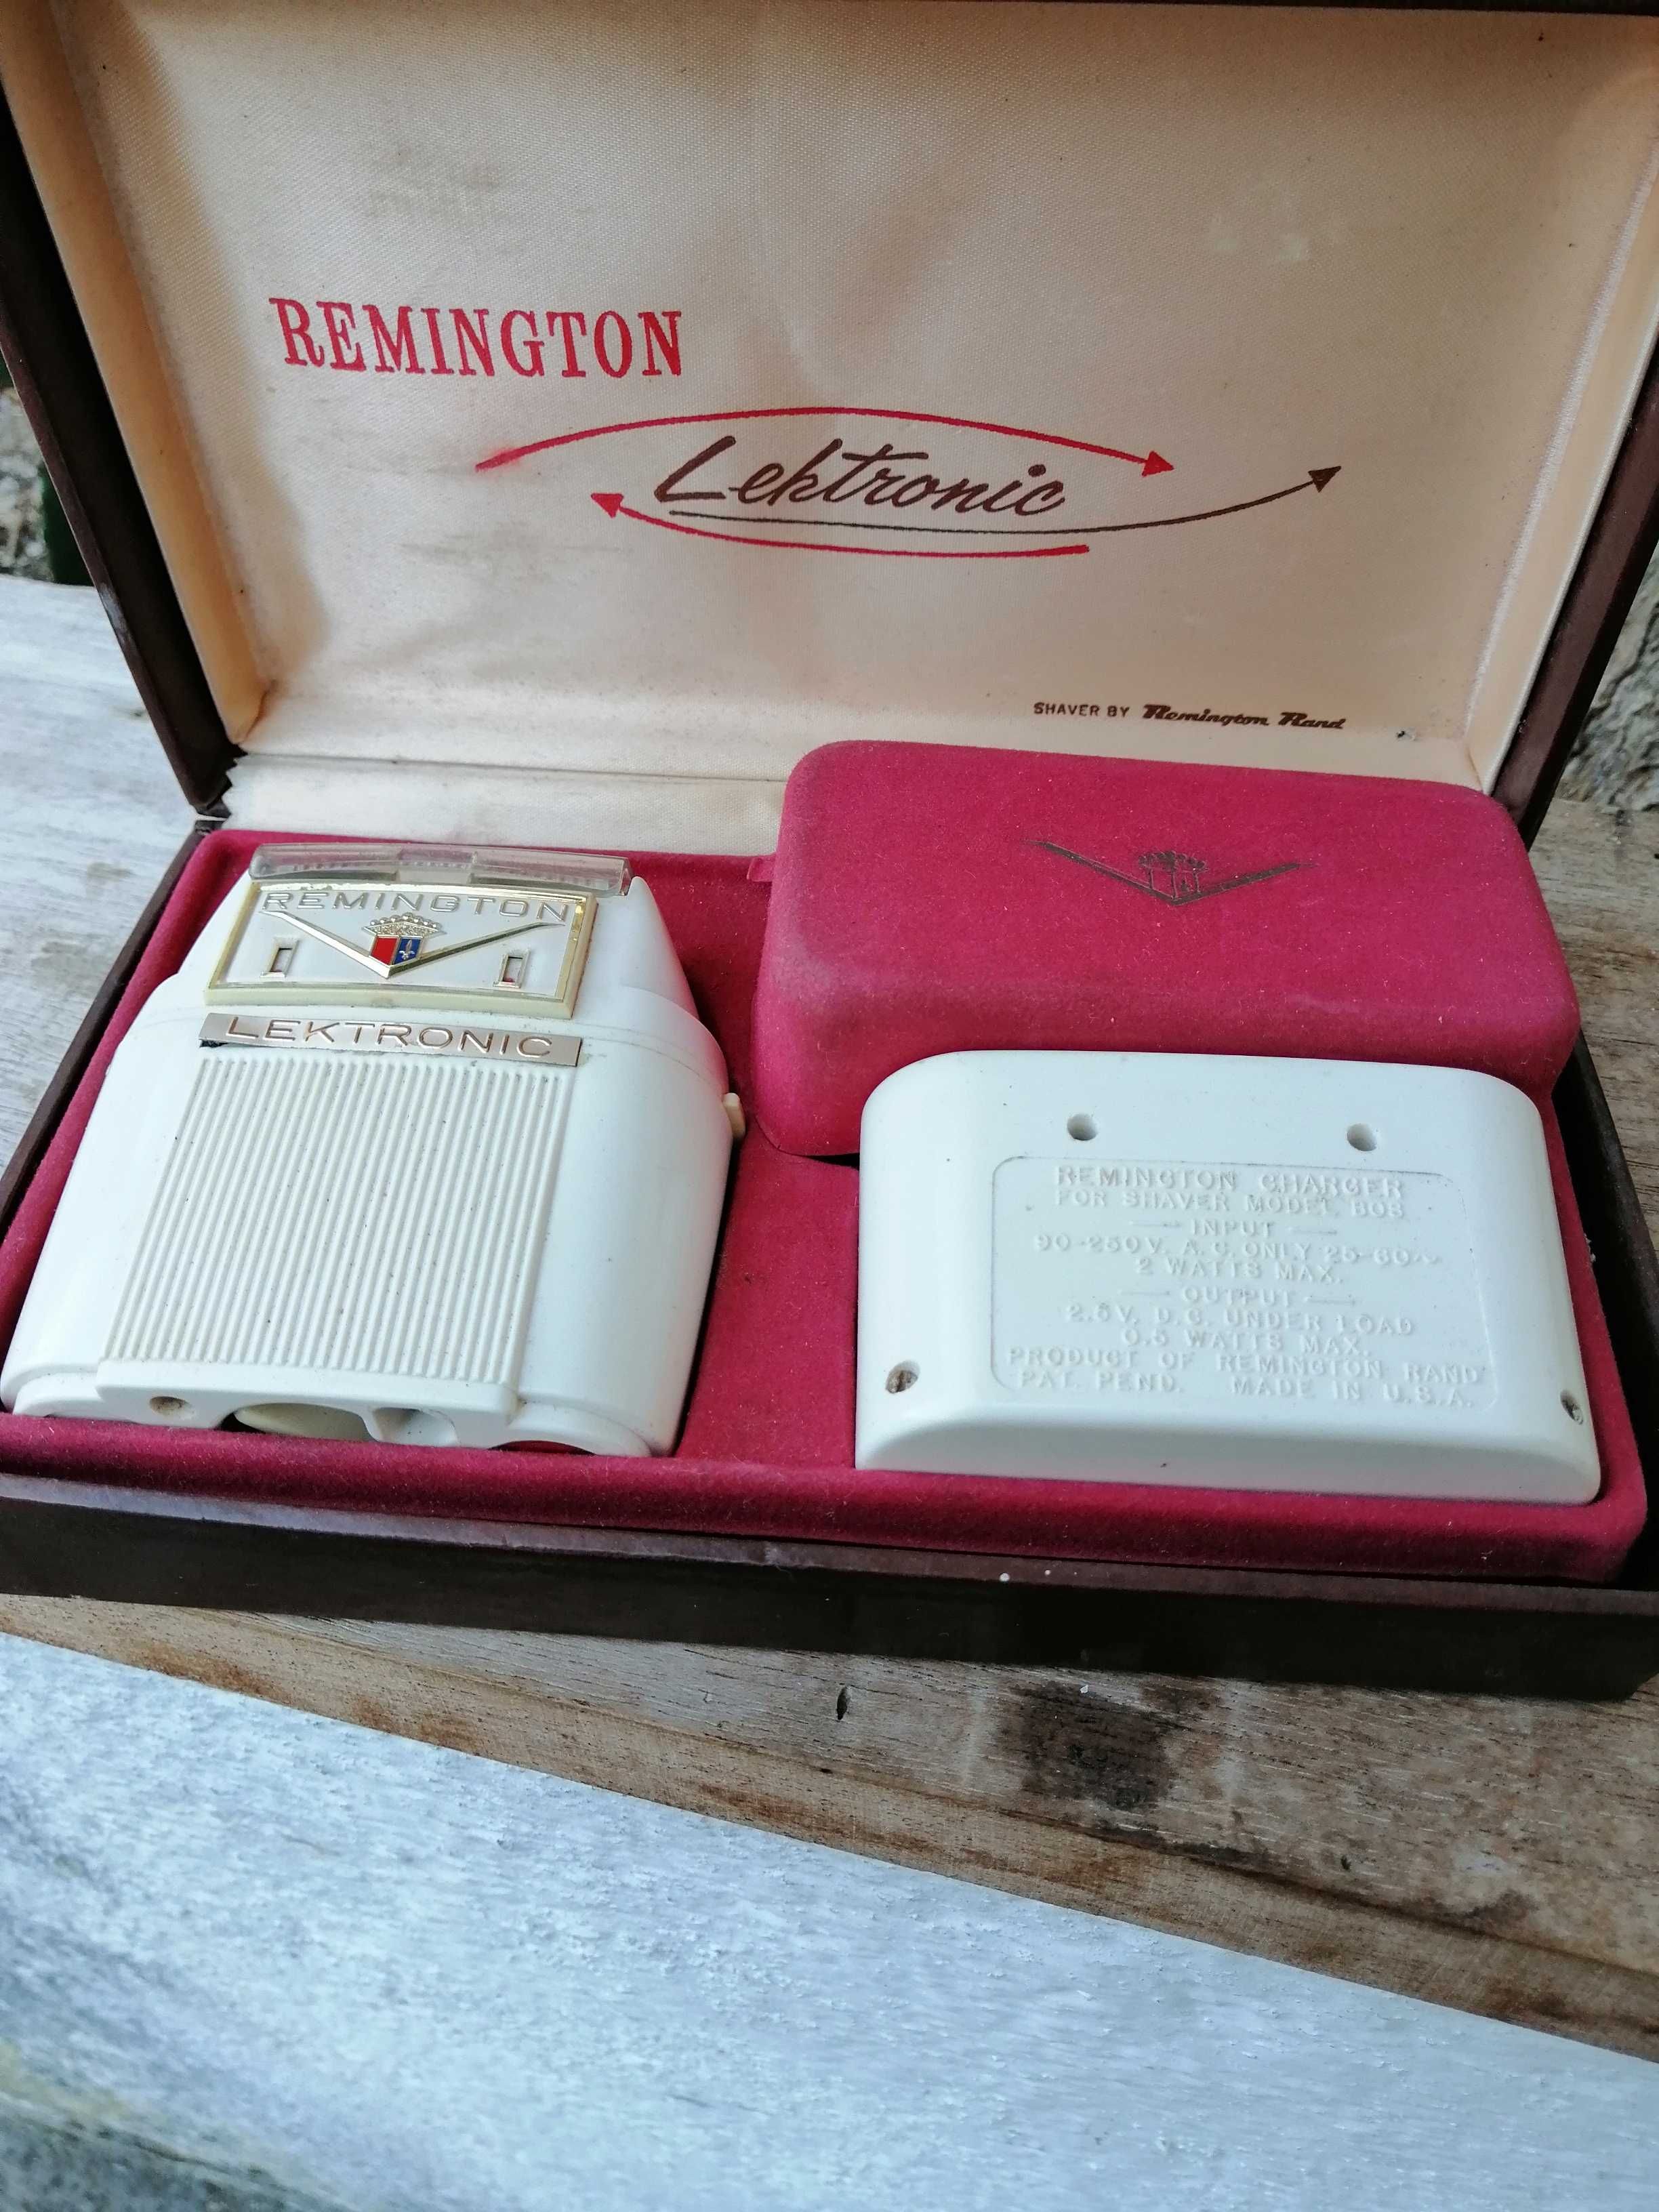 Máquina barbear antiga Remington Lektronic para coleccionadores